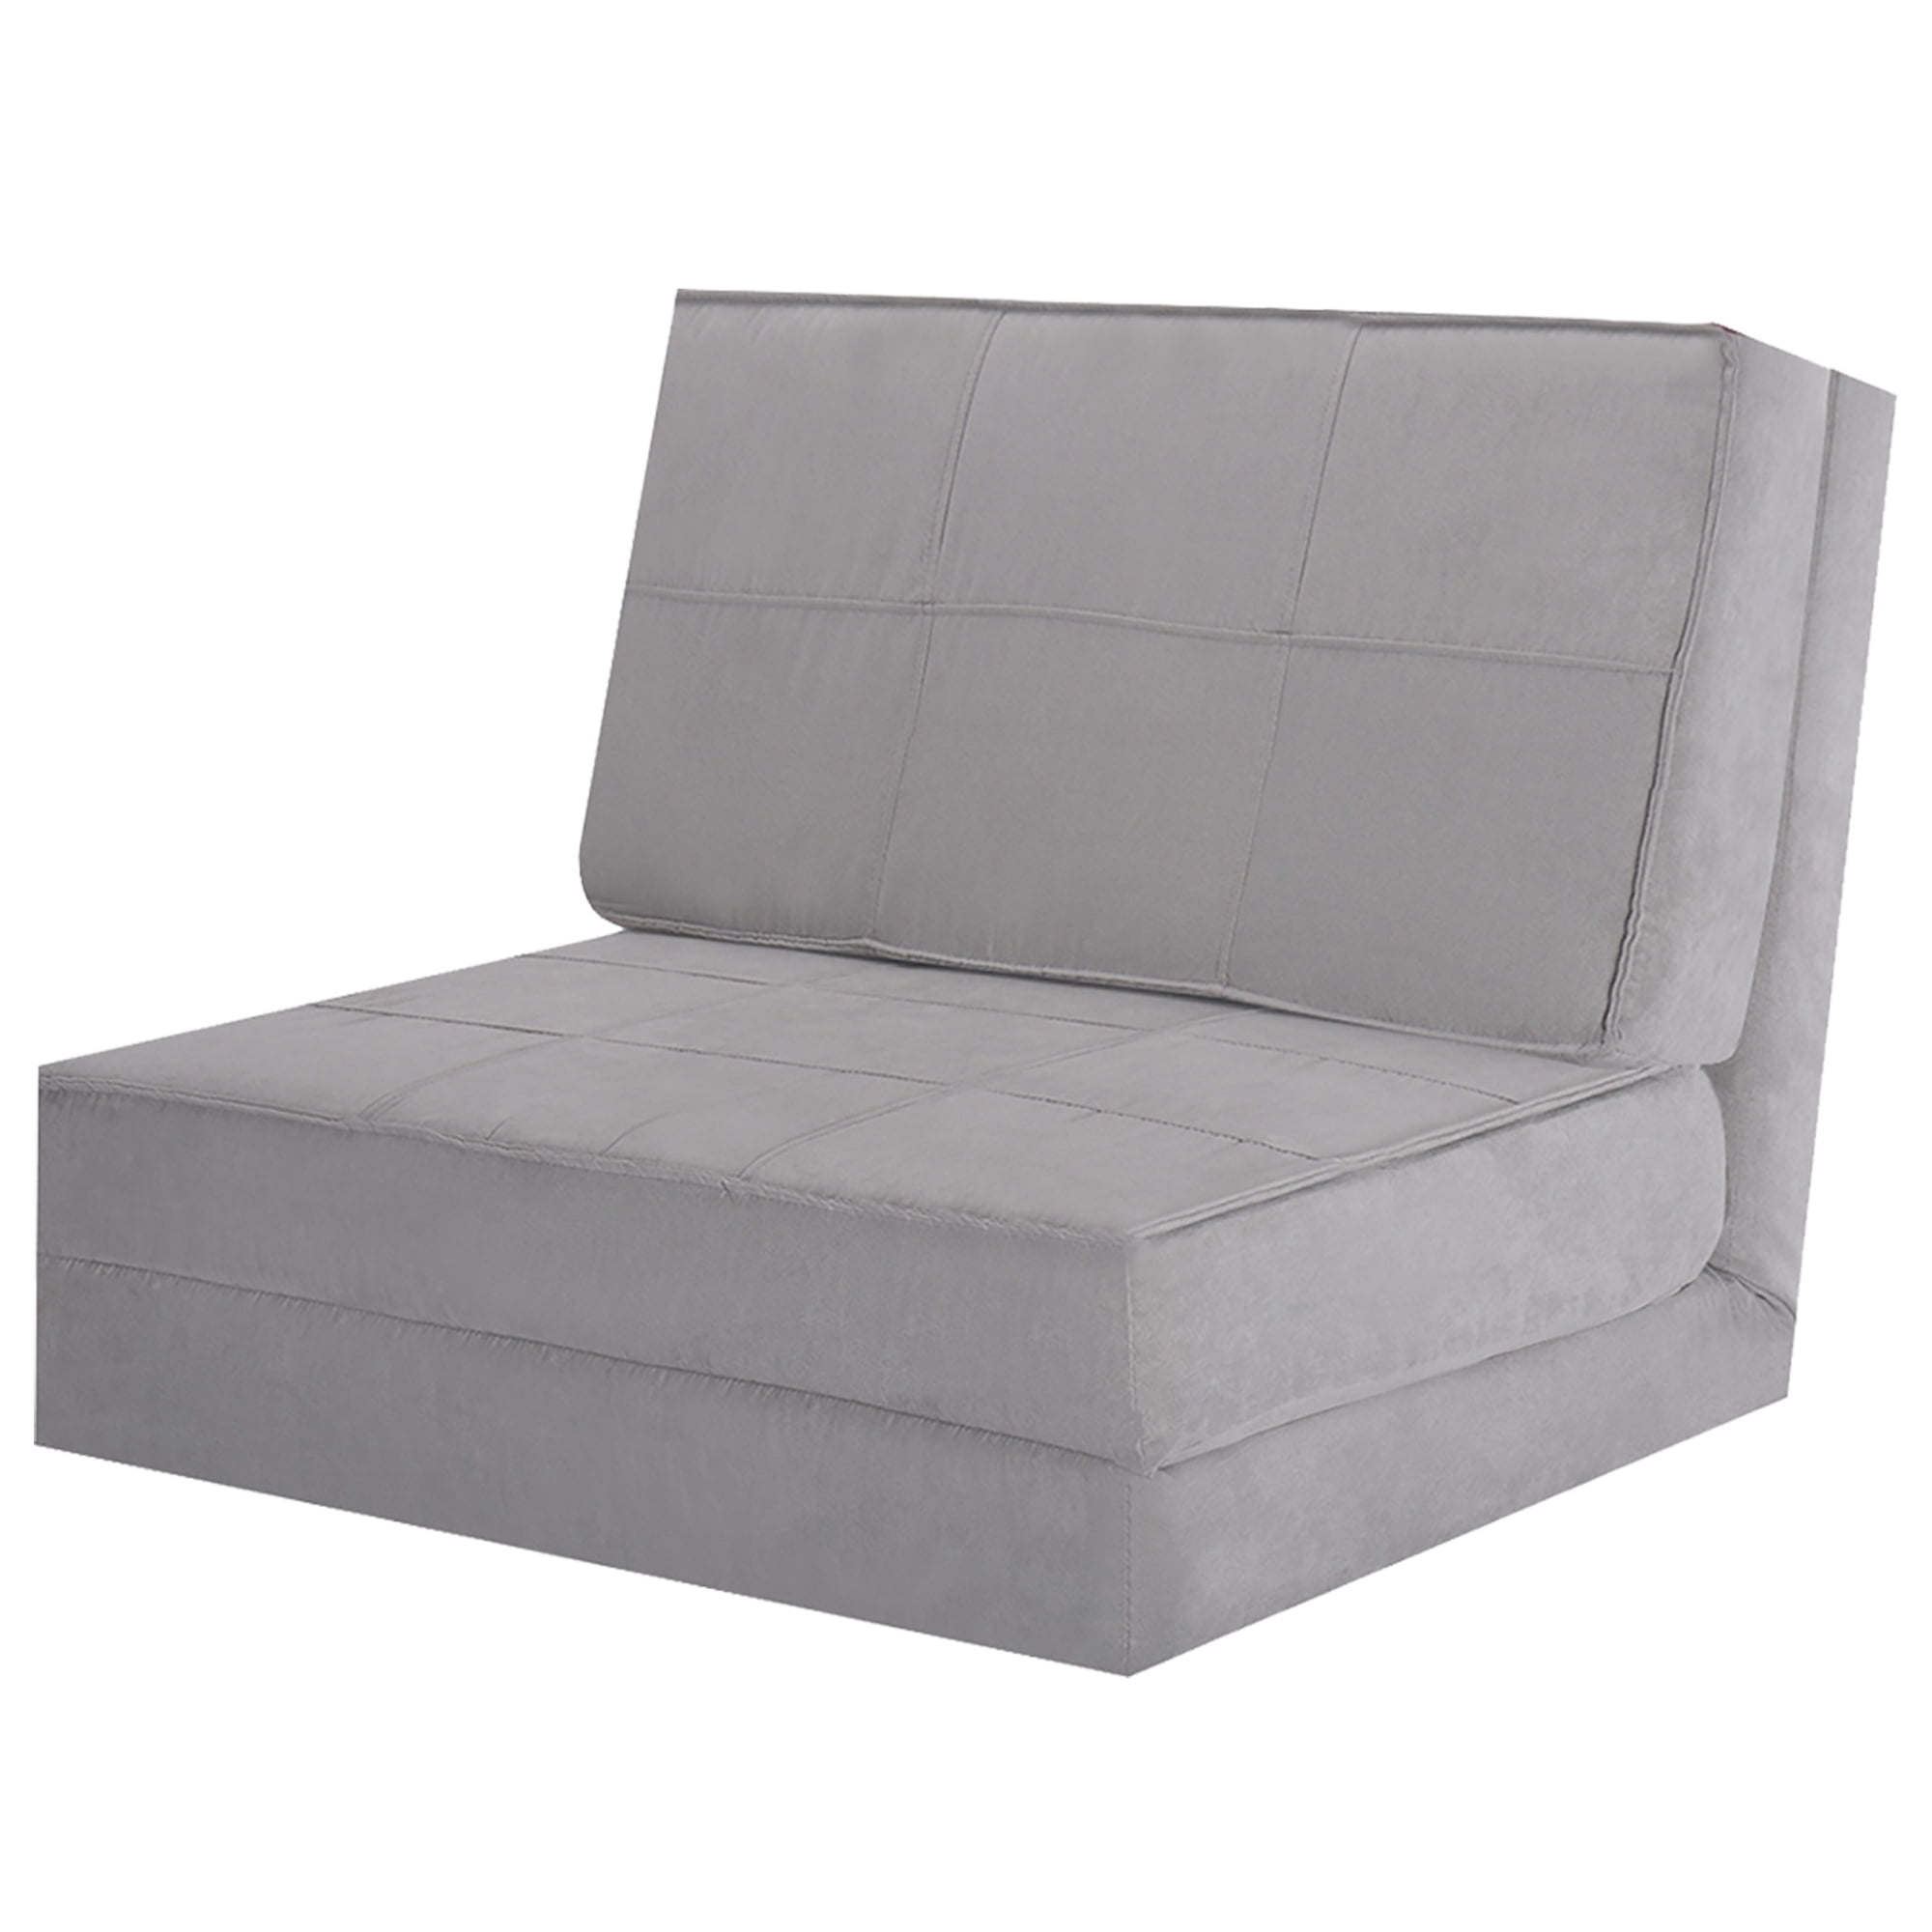 Sleeper Chair Folding Foam Mattresses Couches 6x24x70 Gray Foldable Sofa Beds 